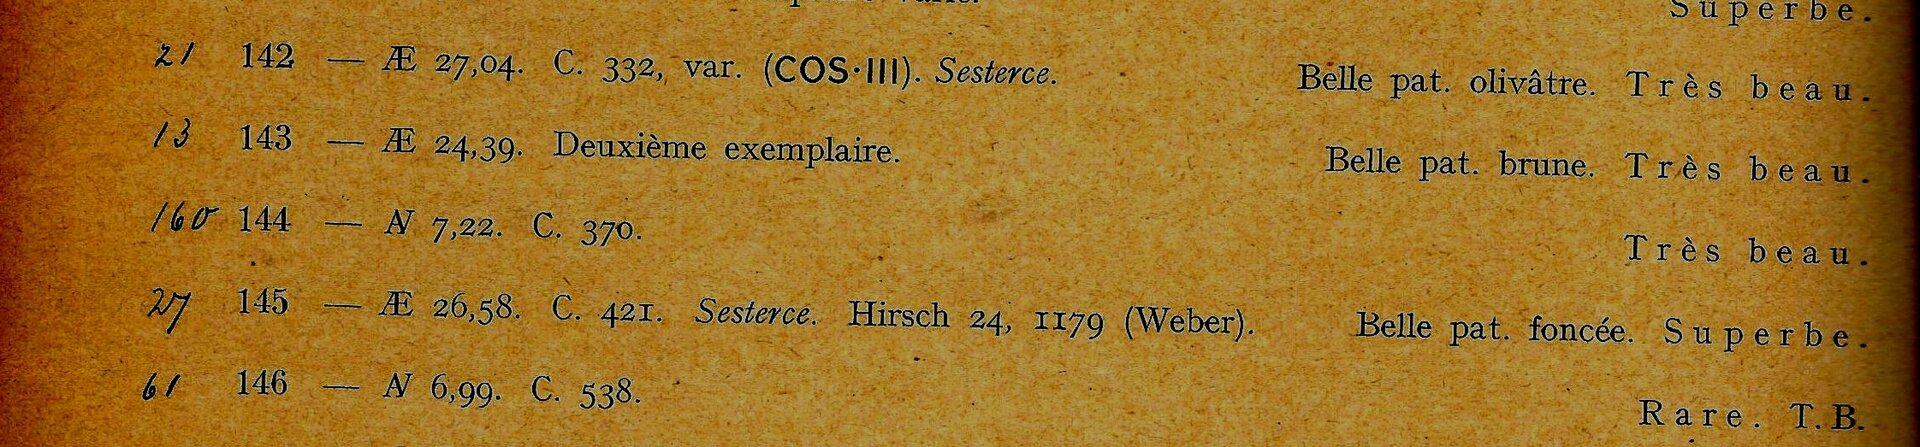 1938 Ars Classica XVIII cropped description of Lot 144 Vespasian aureus.jpg